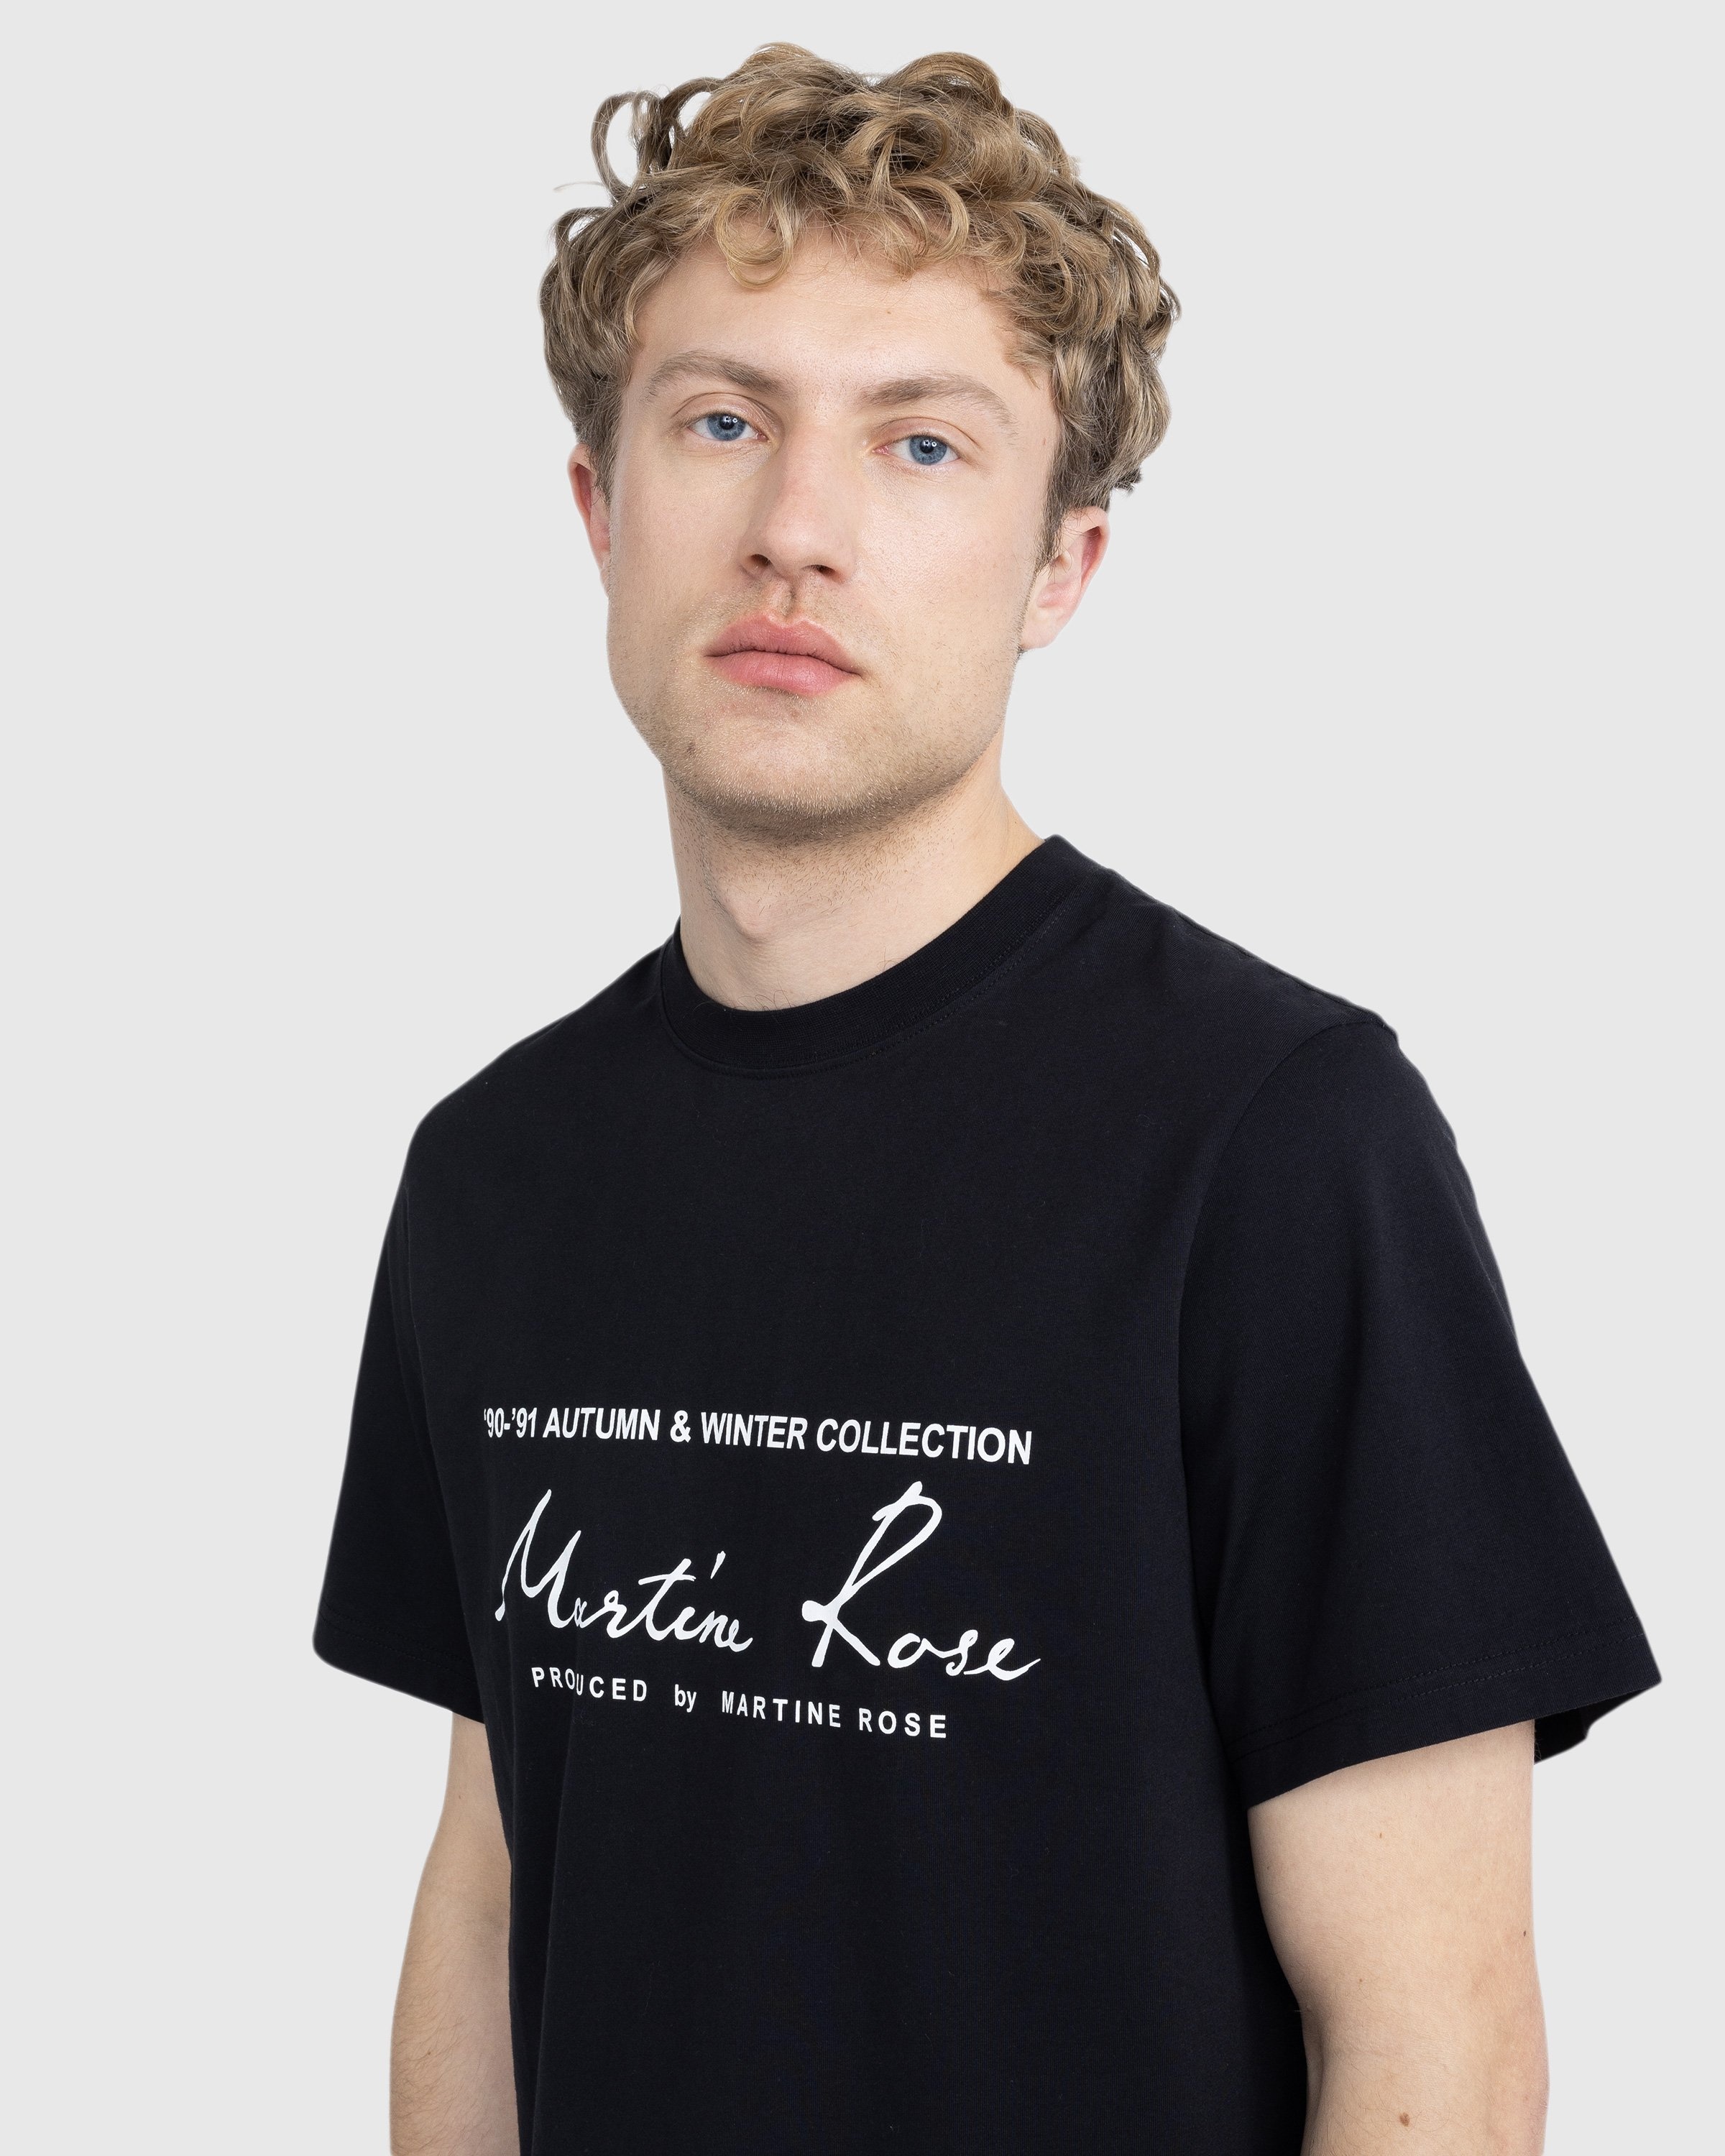 Martine Rose – Classic S/S T-Shirt Black